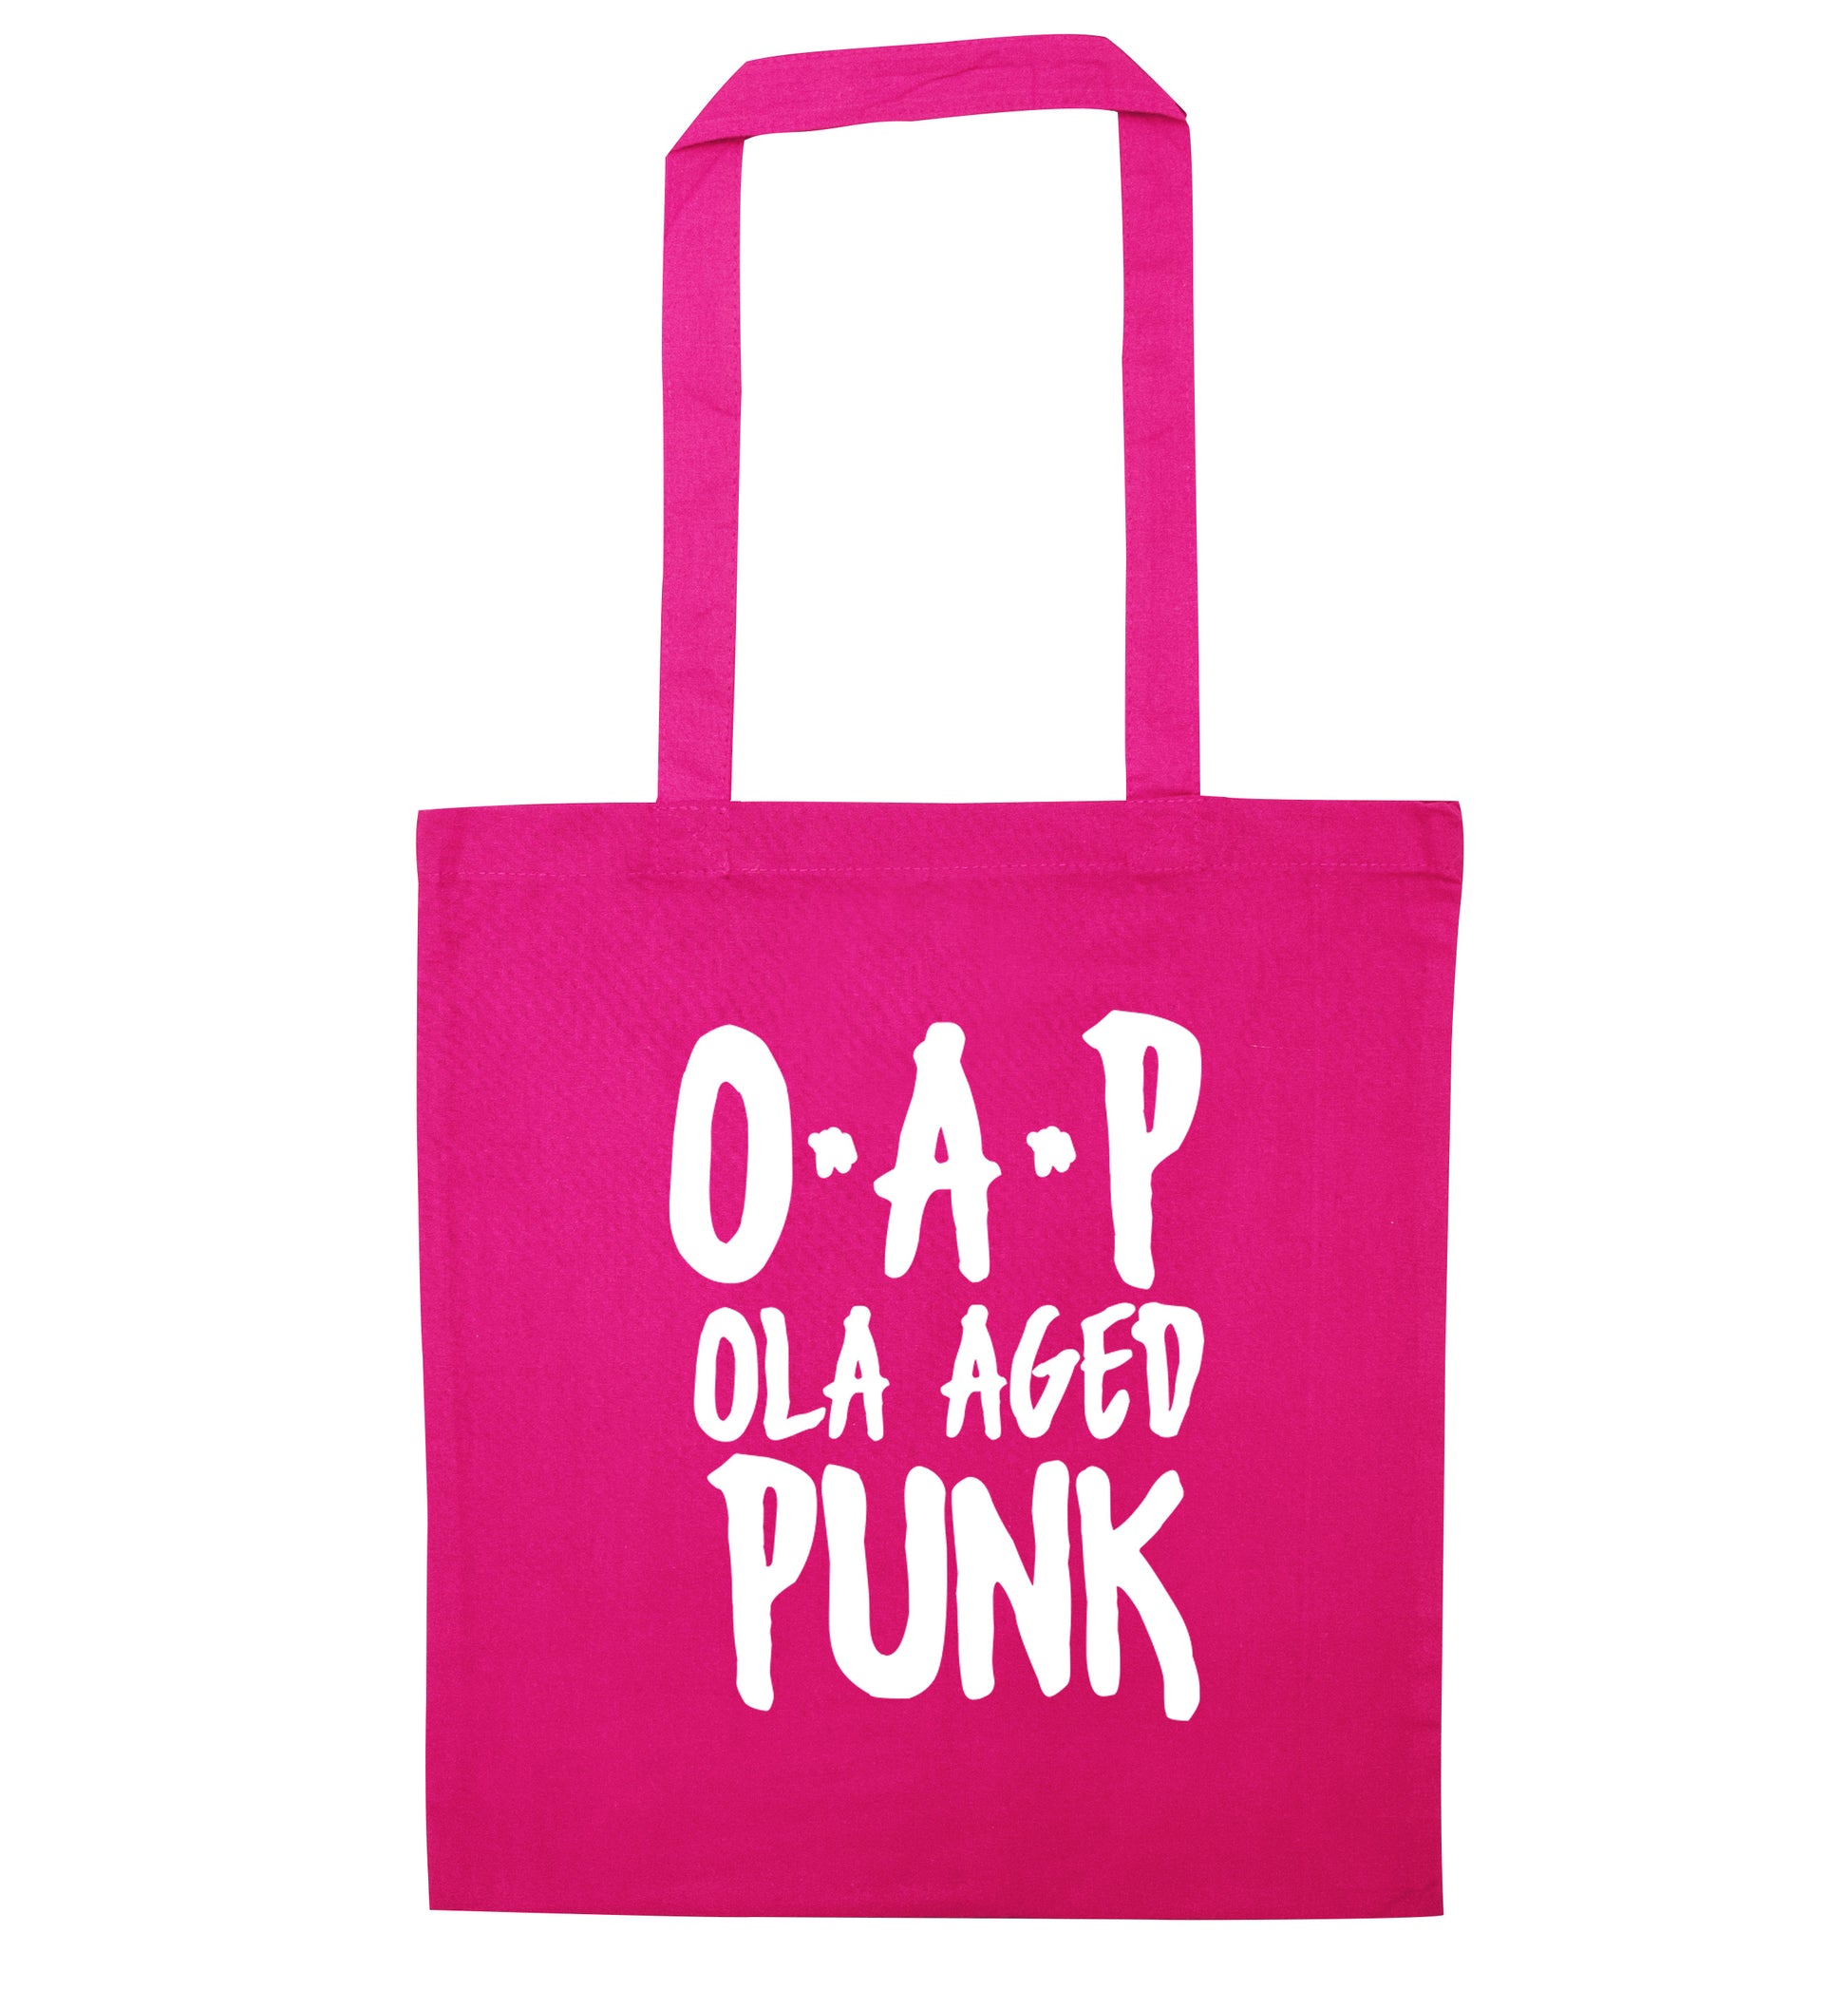 O.A.P Old Aged Punk pink tote bag